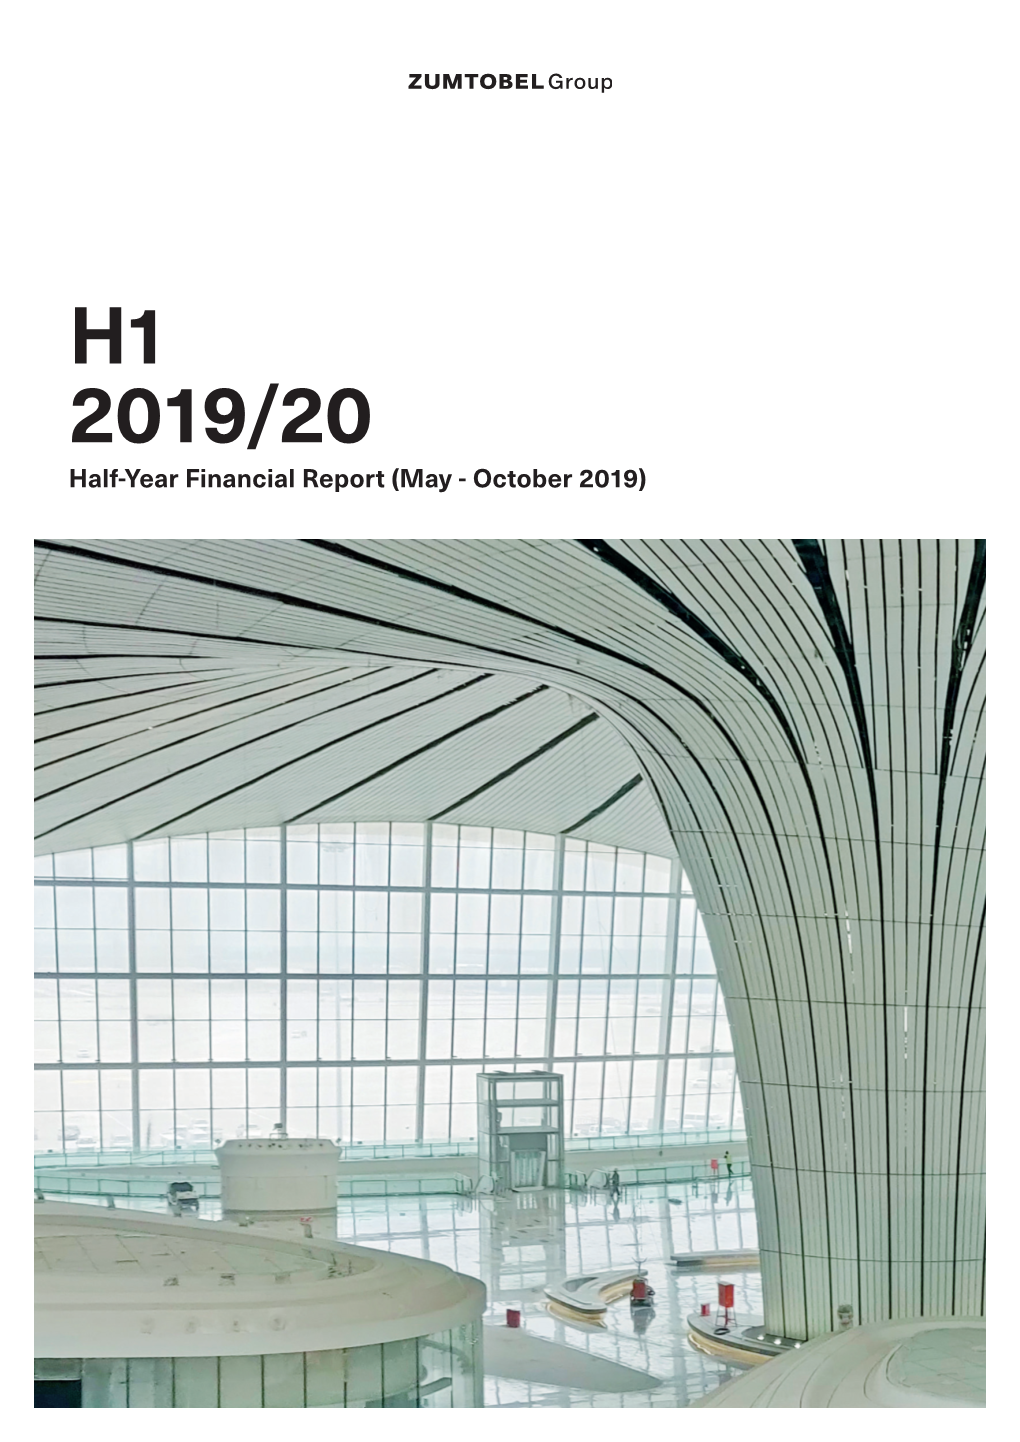 H1 2019/20 Half-Year Financial Report (May - October 2019)